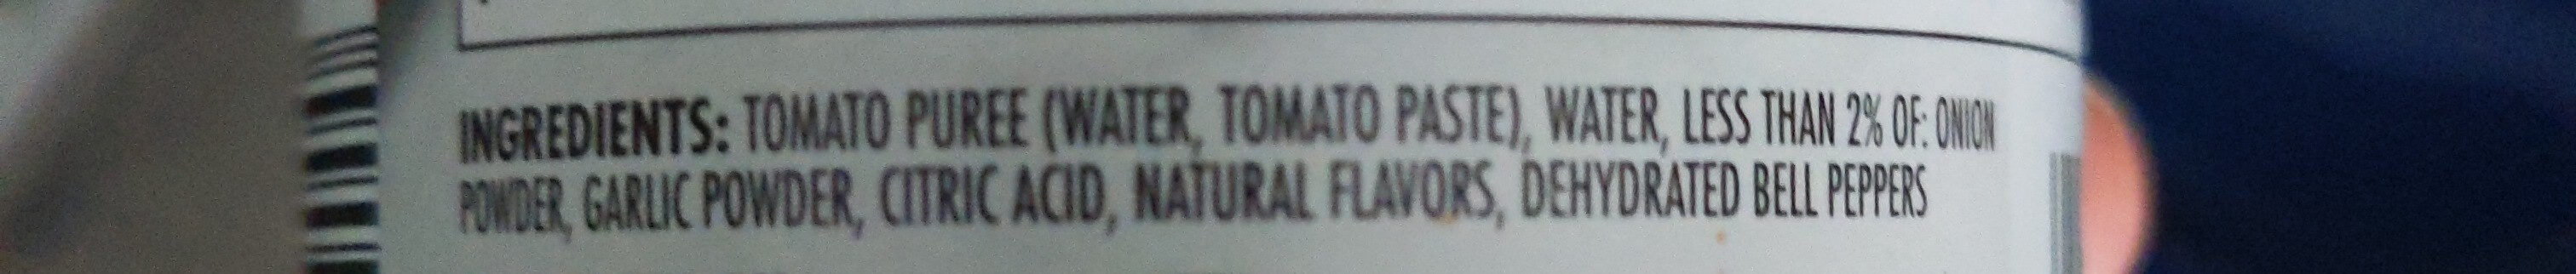 No Salt Added Tomato Sauce - Ingredients - en